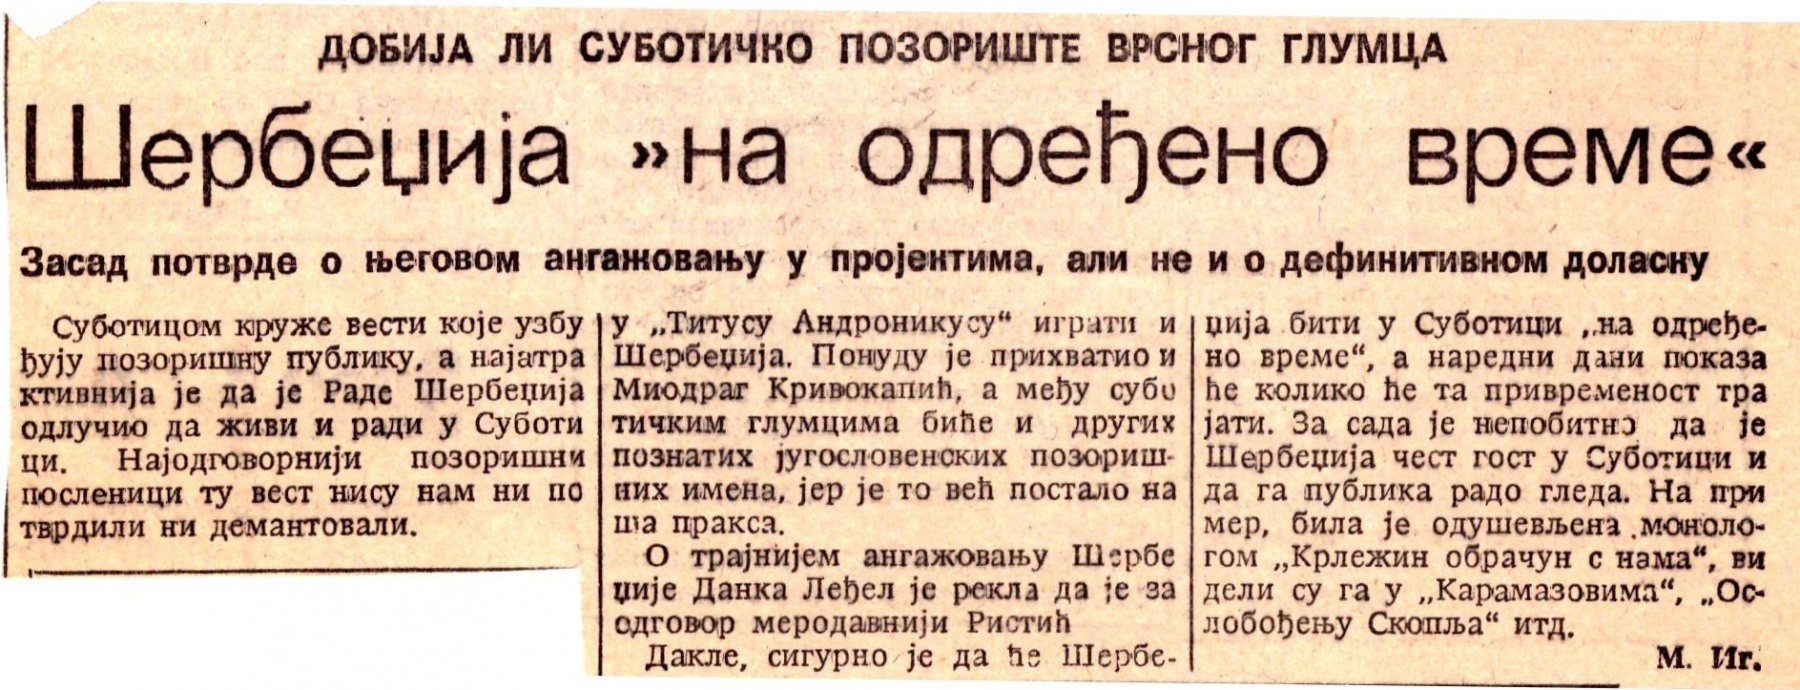 novosti-1986-rade